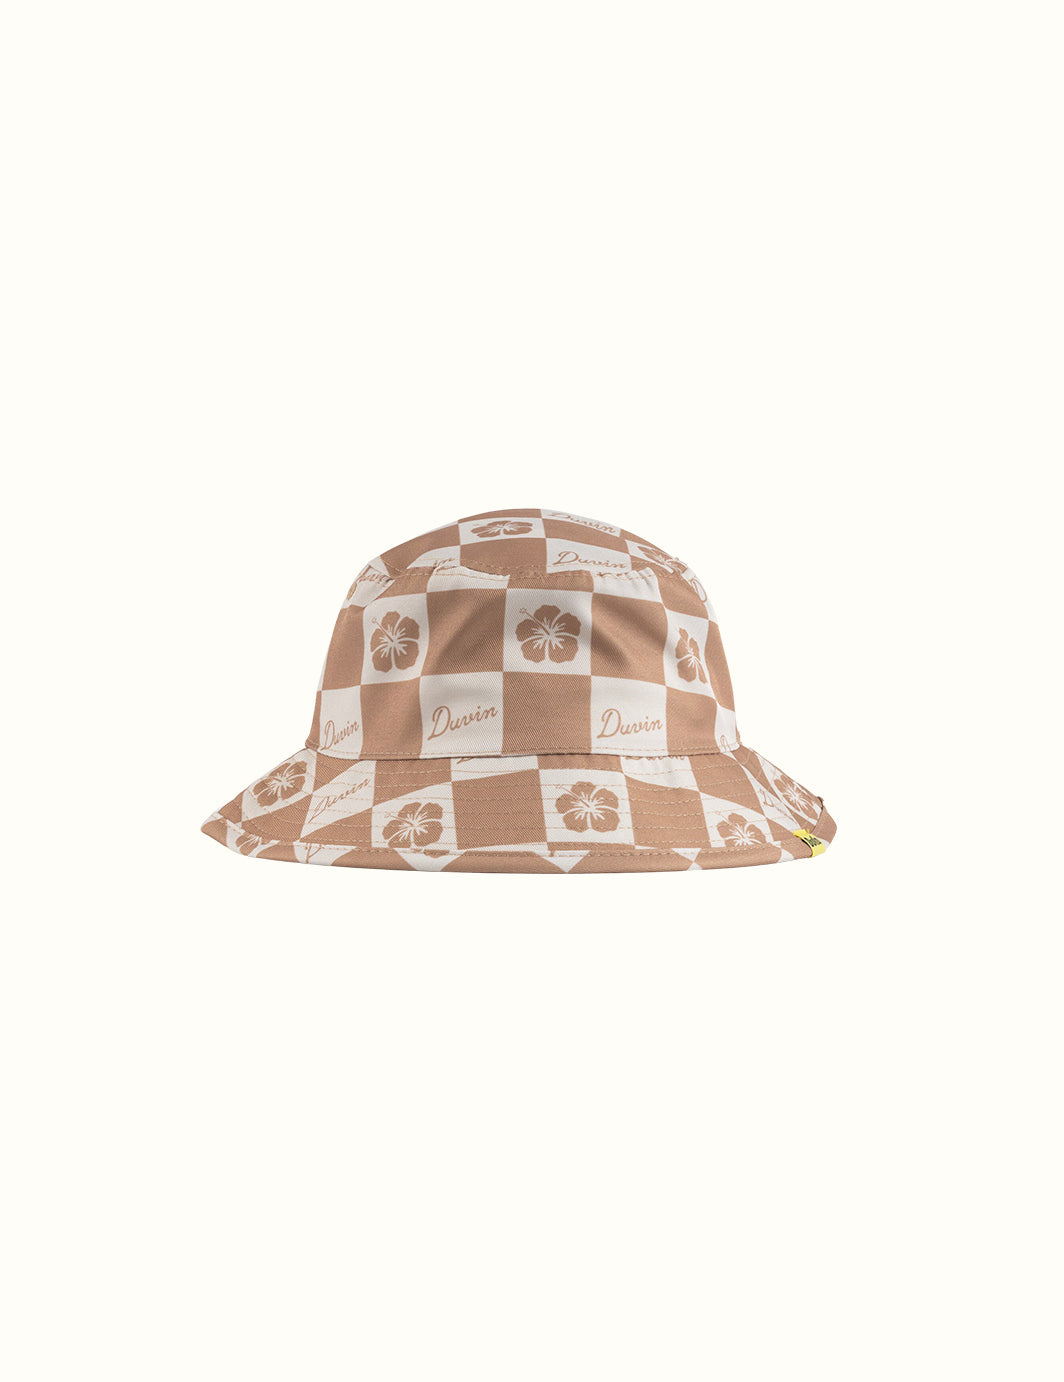 Checker Floral Bucket hat - Tan